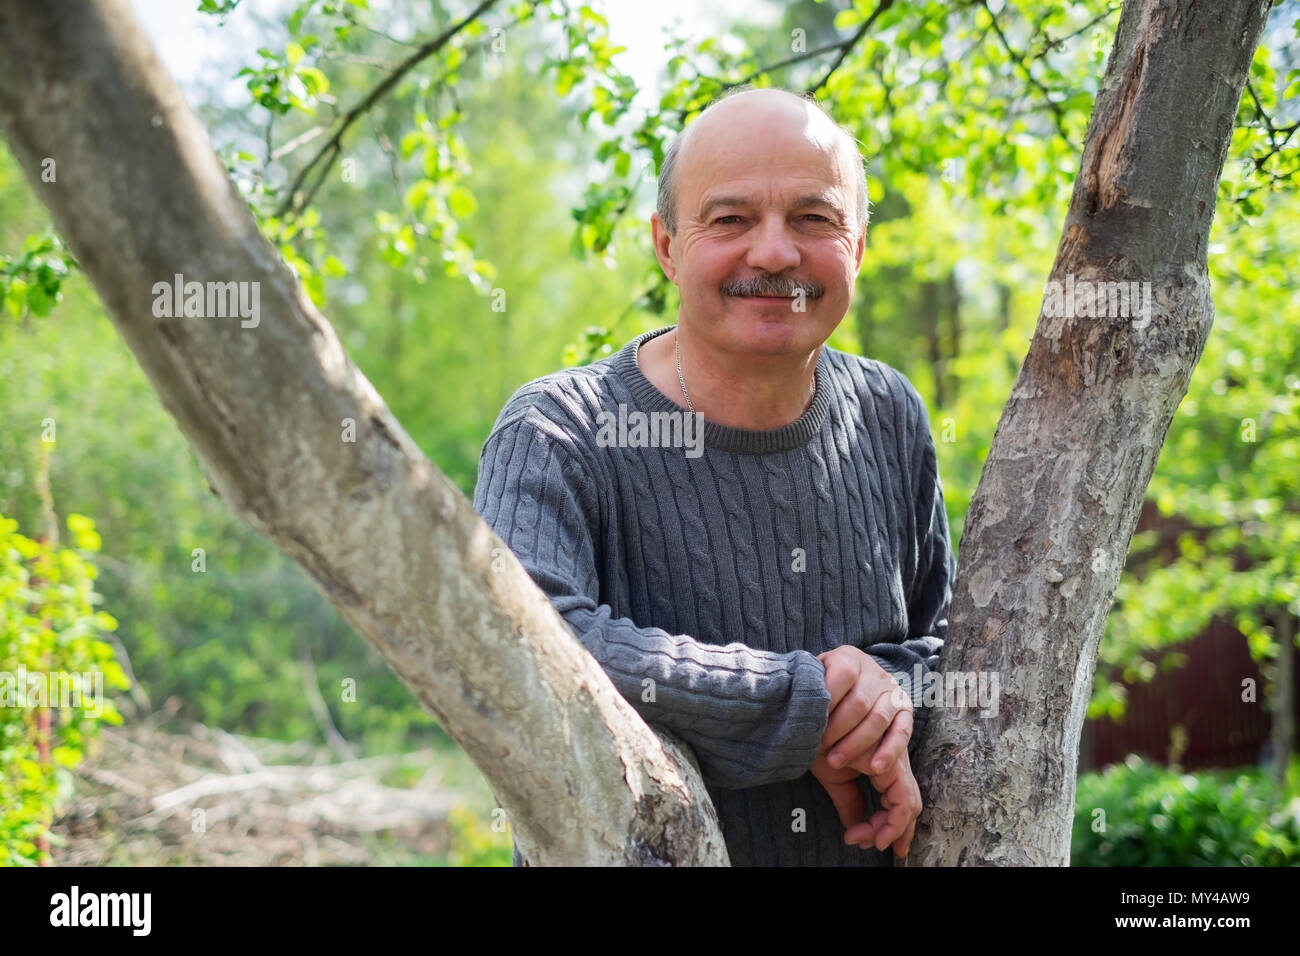 Portrait of confident male gardener standing near fruit tree. Stock Photo